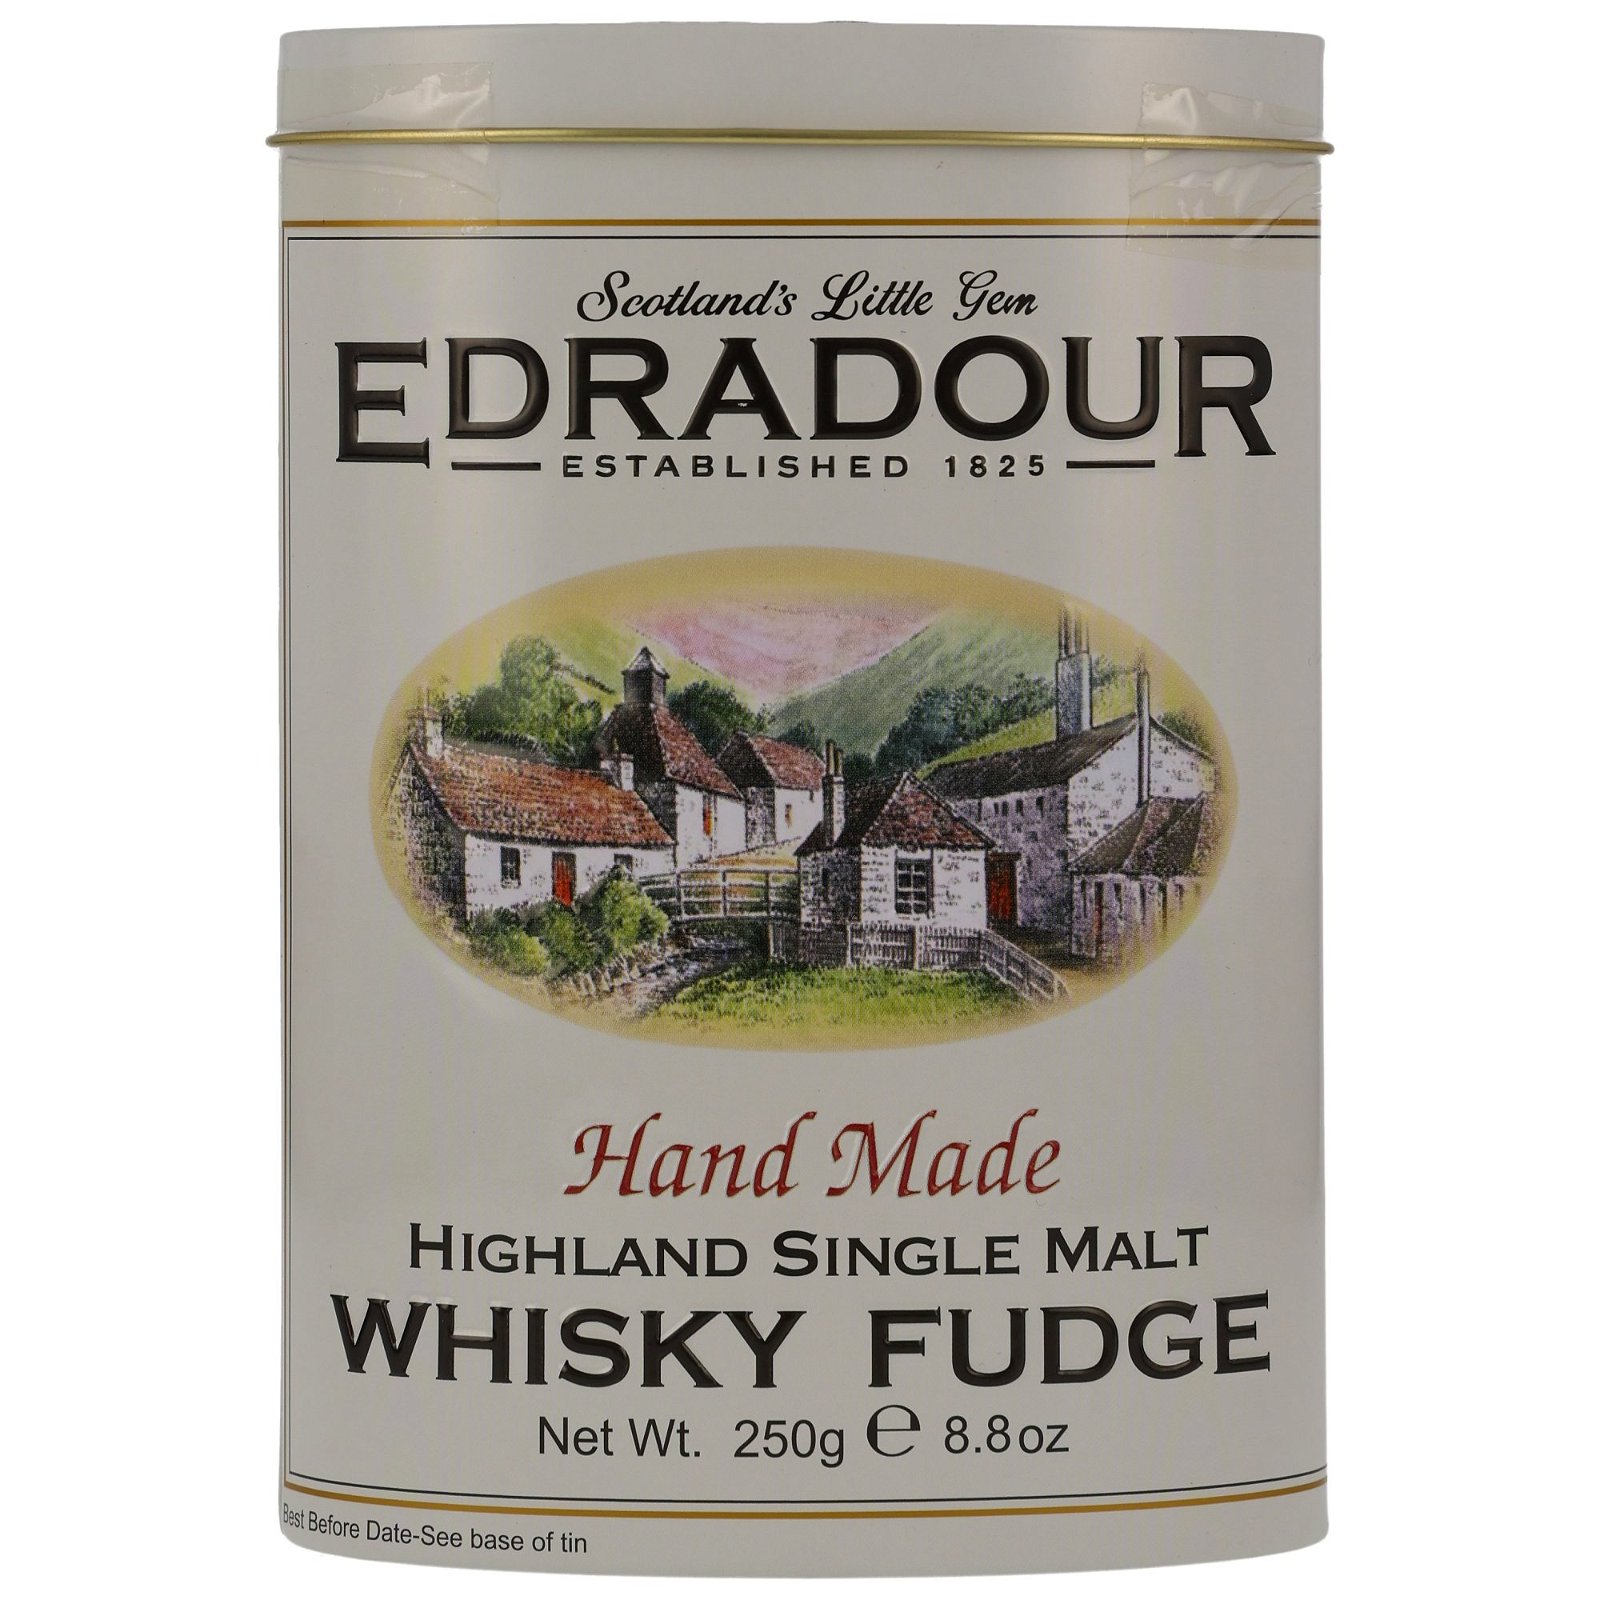 Edradour Single Malt Whisky Fudge 250g